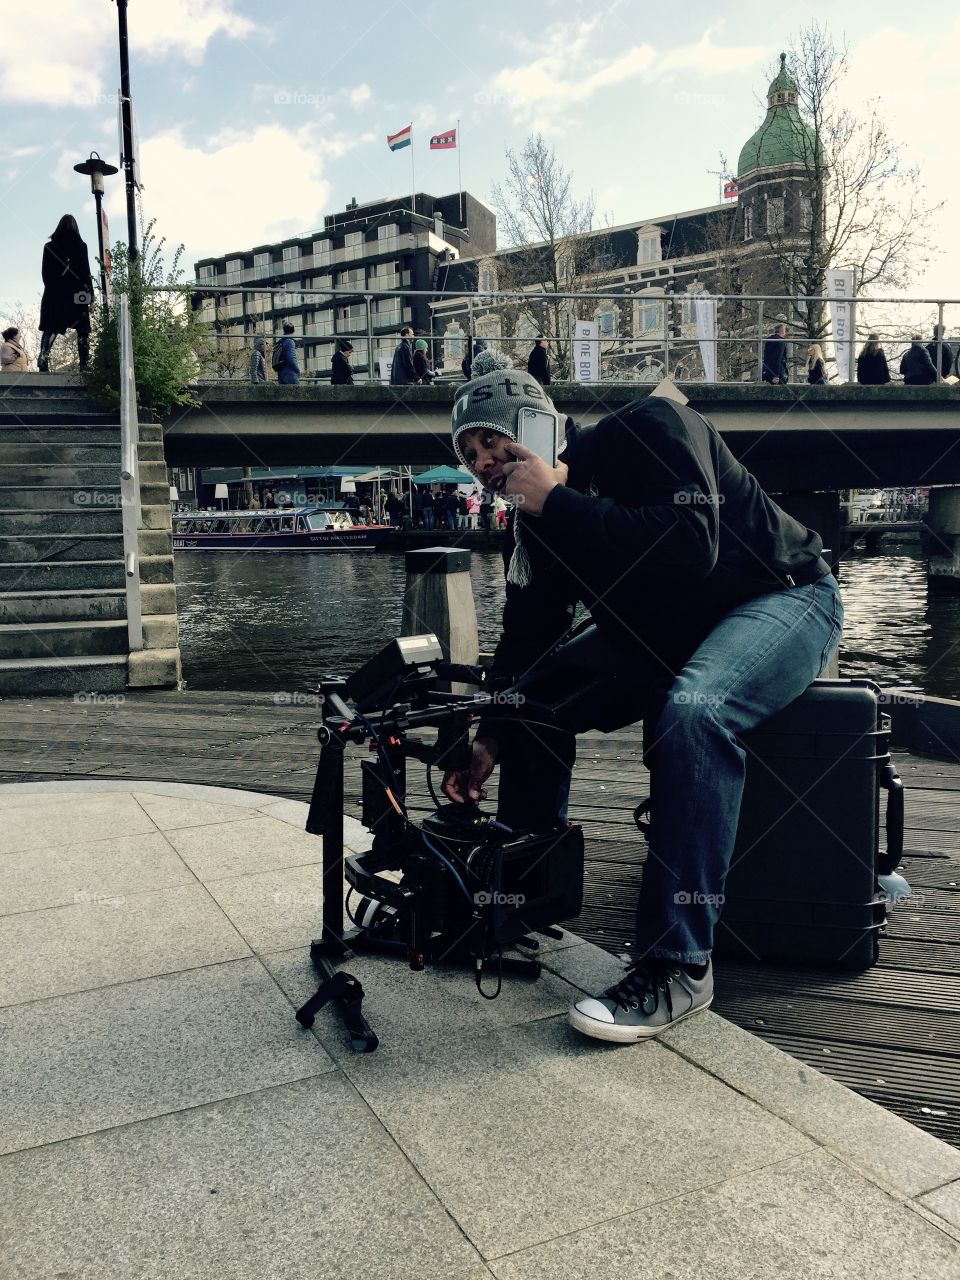 Camera man filming in Amsterdam 